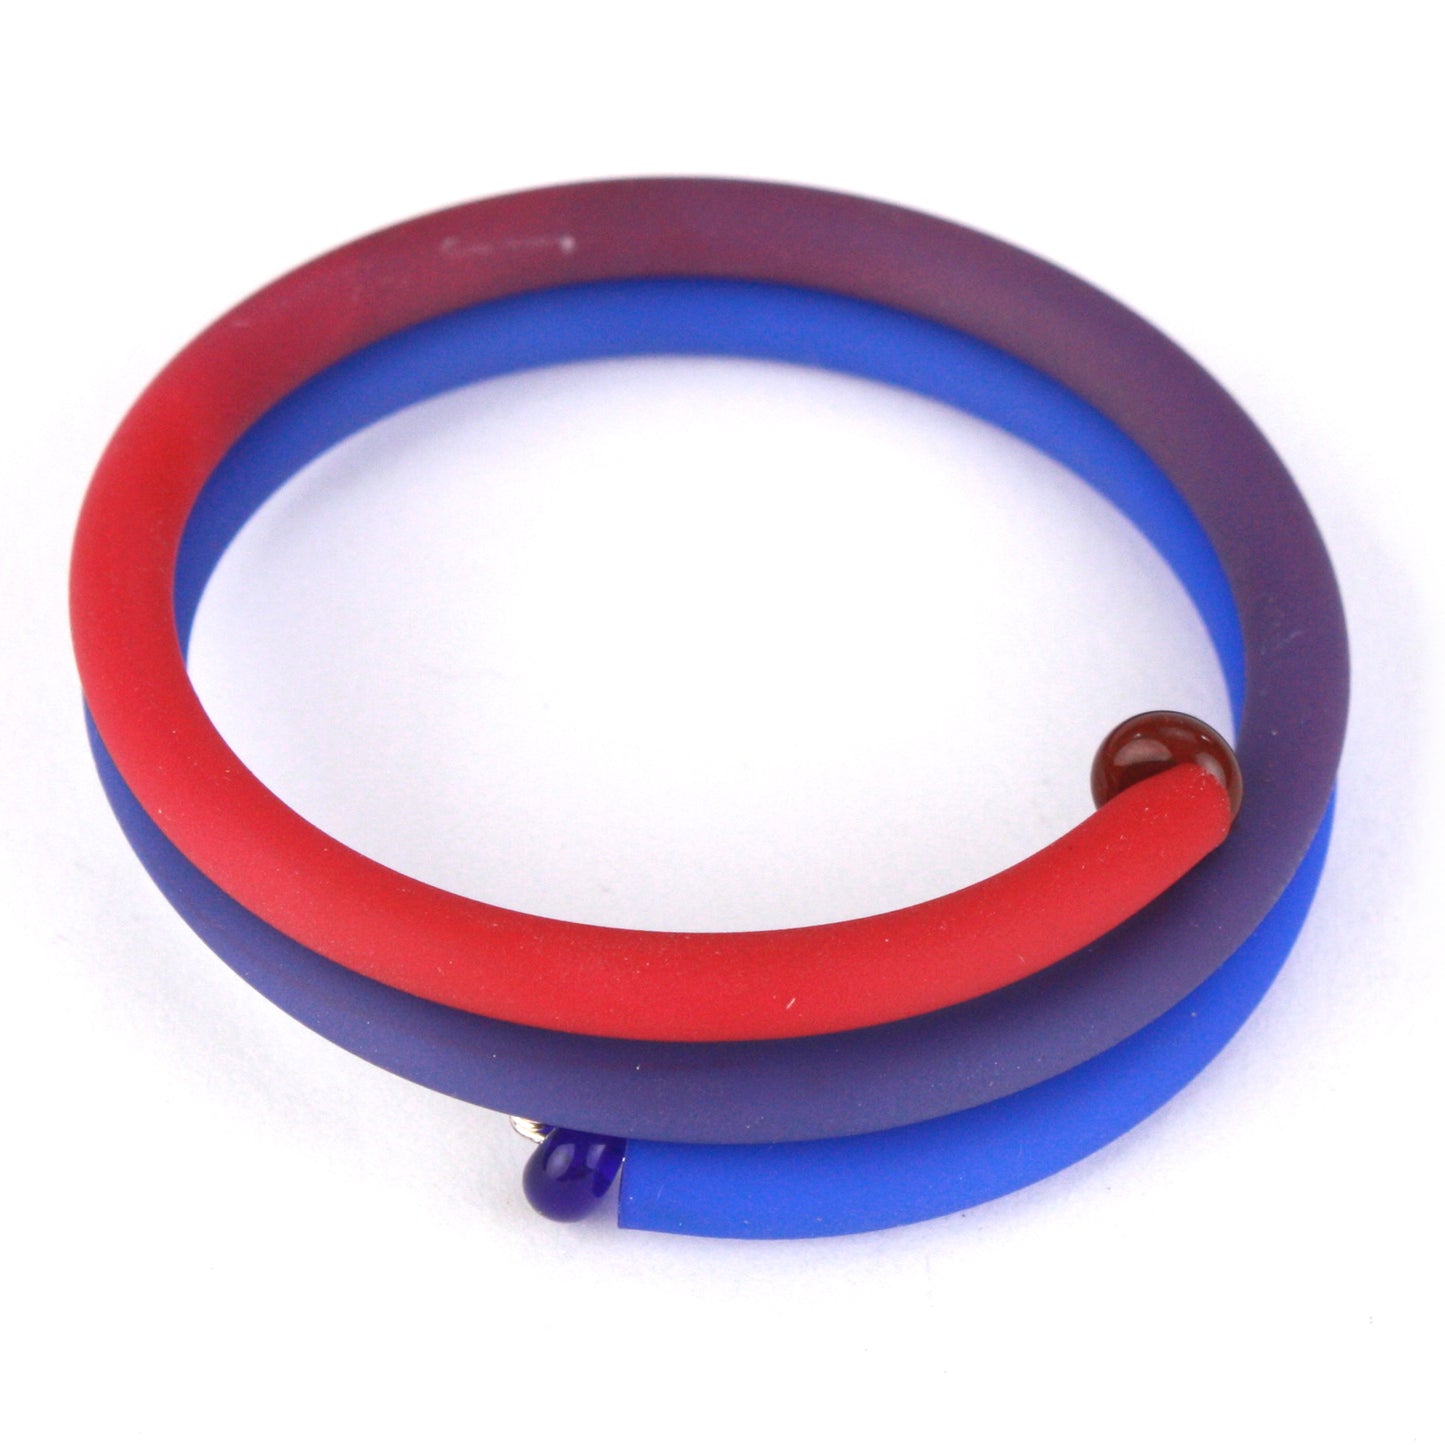 Double wrap bracelet - red to dark blue